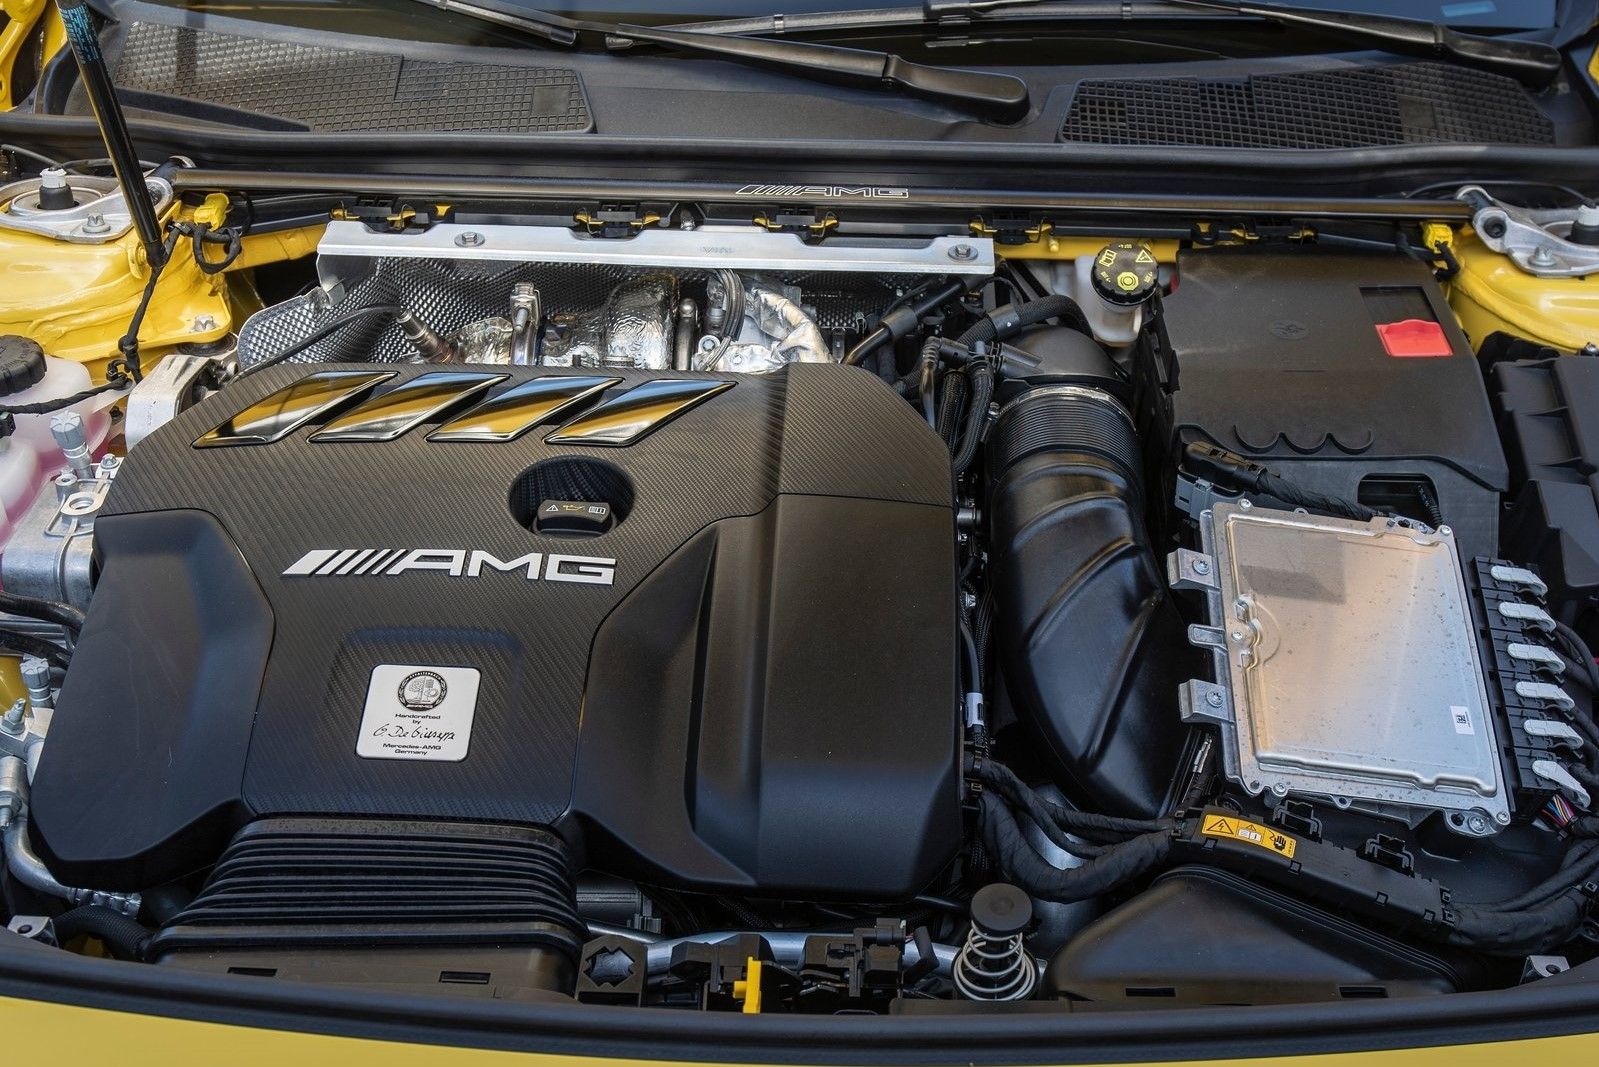 Mercedes AMG A45 S engine closeup